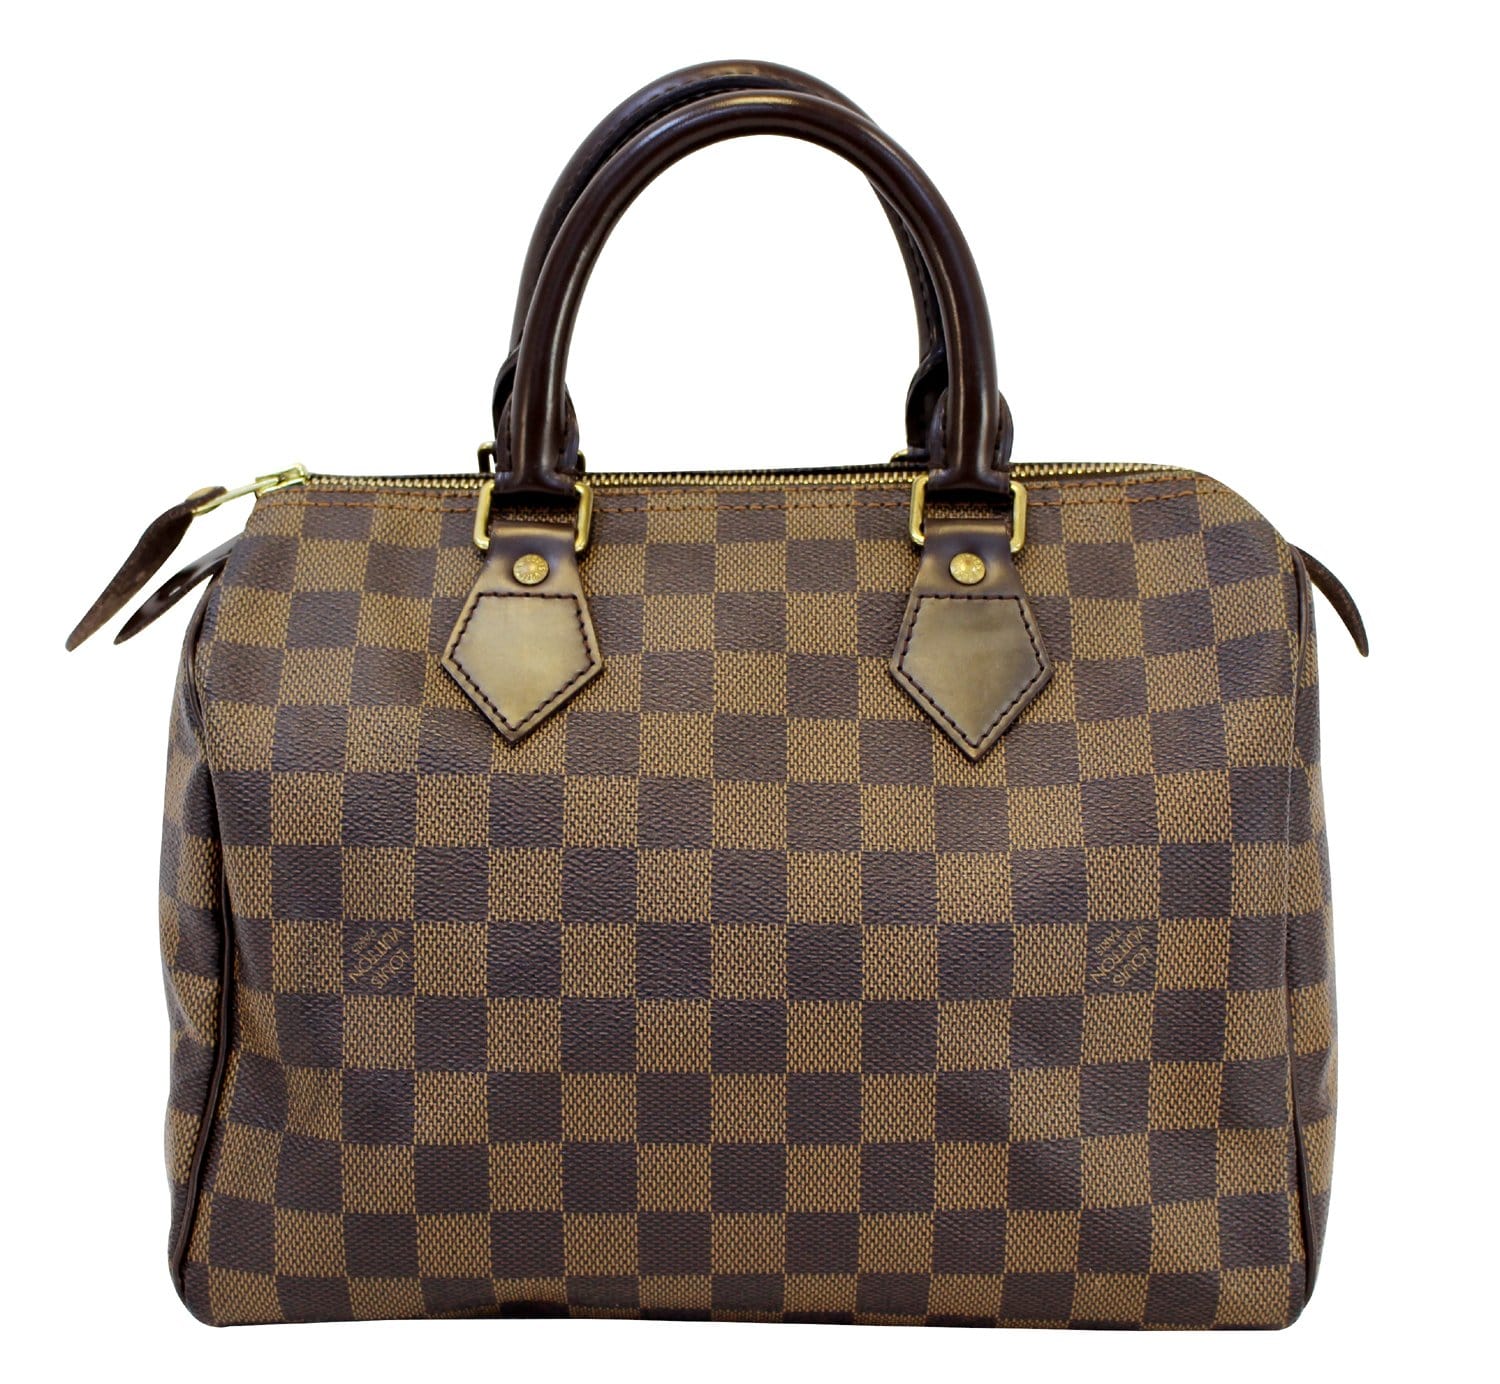 Luxury Handbag Regret?? Things I Don't Like About My Louis Vuitton Speedy B 25  Damier Ebene 